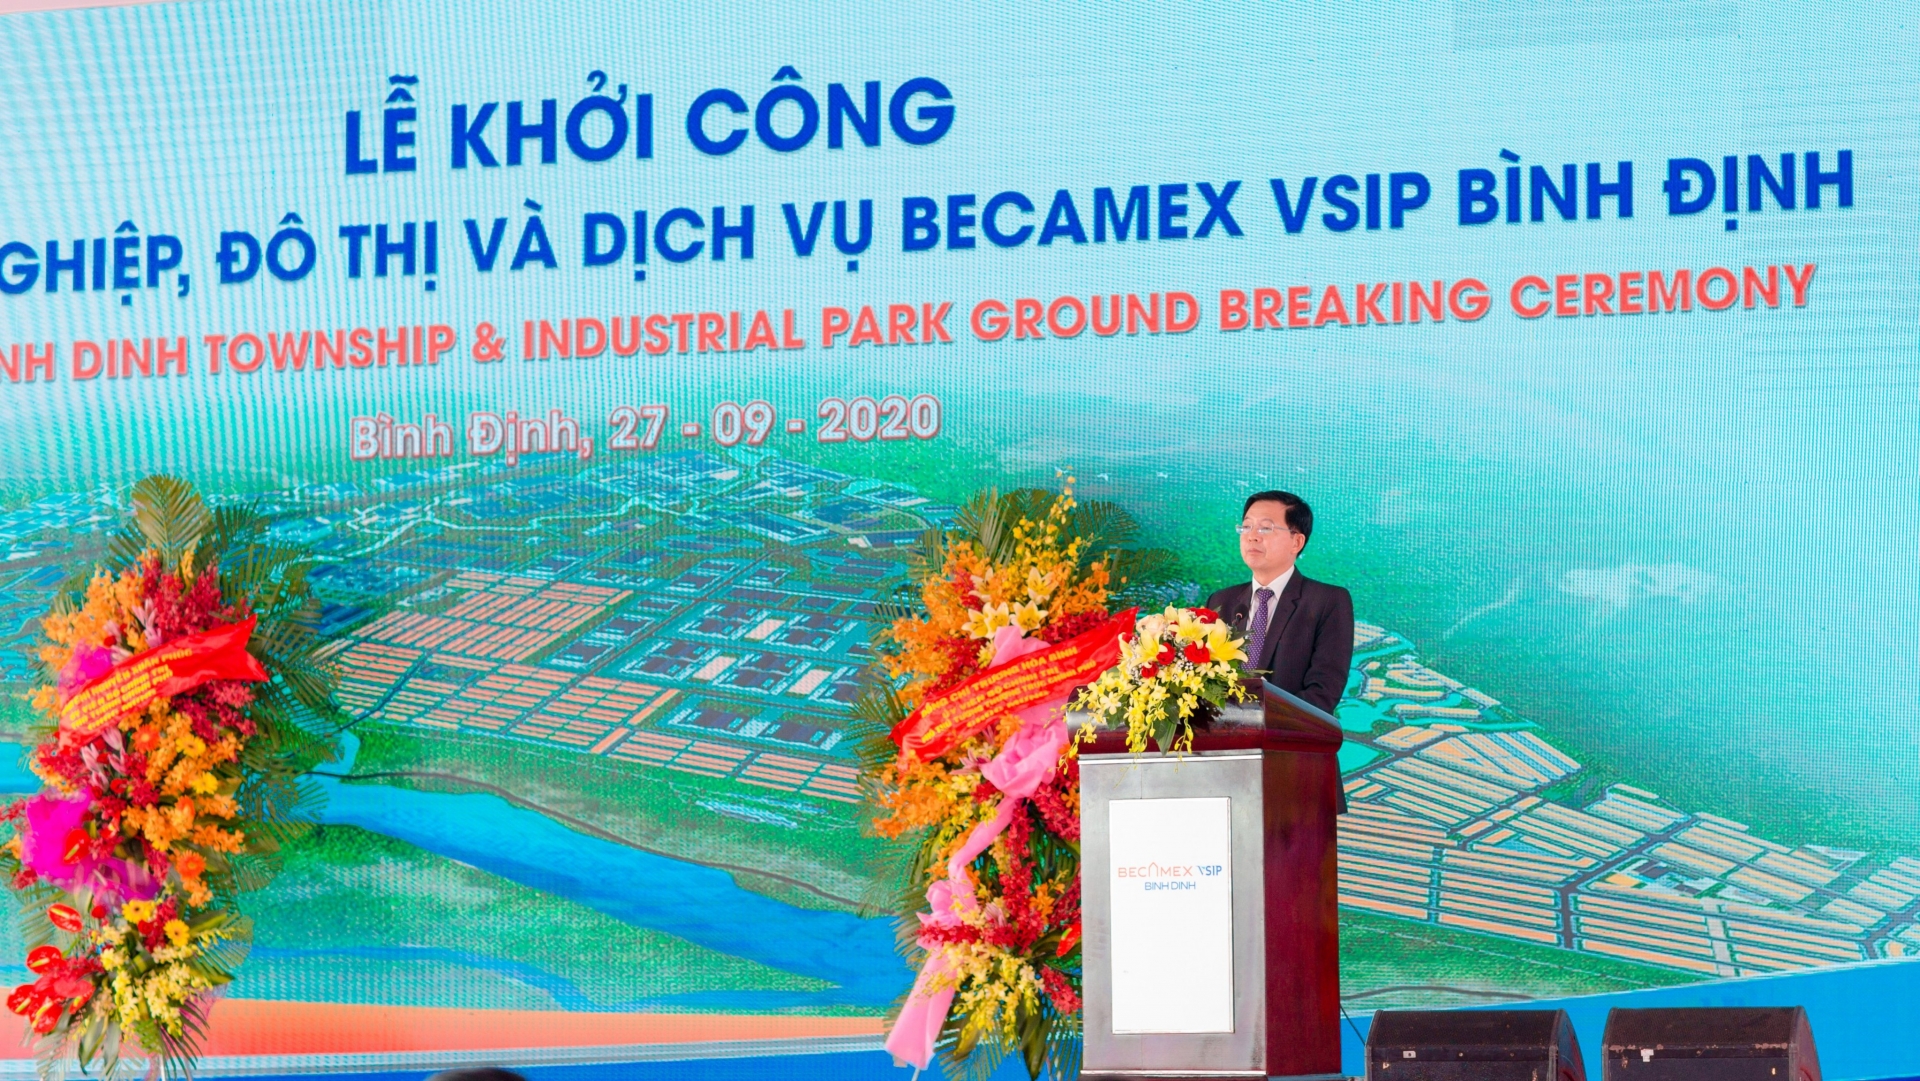 becamex vsip binh dinh elevates economic development in central region